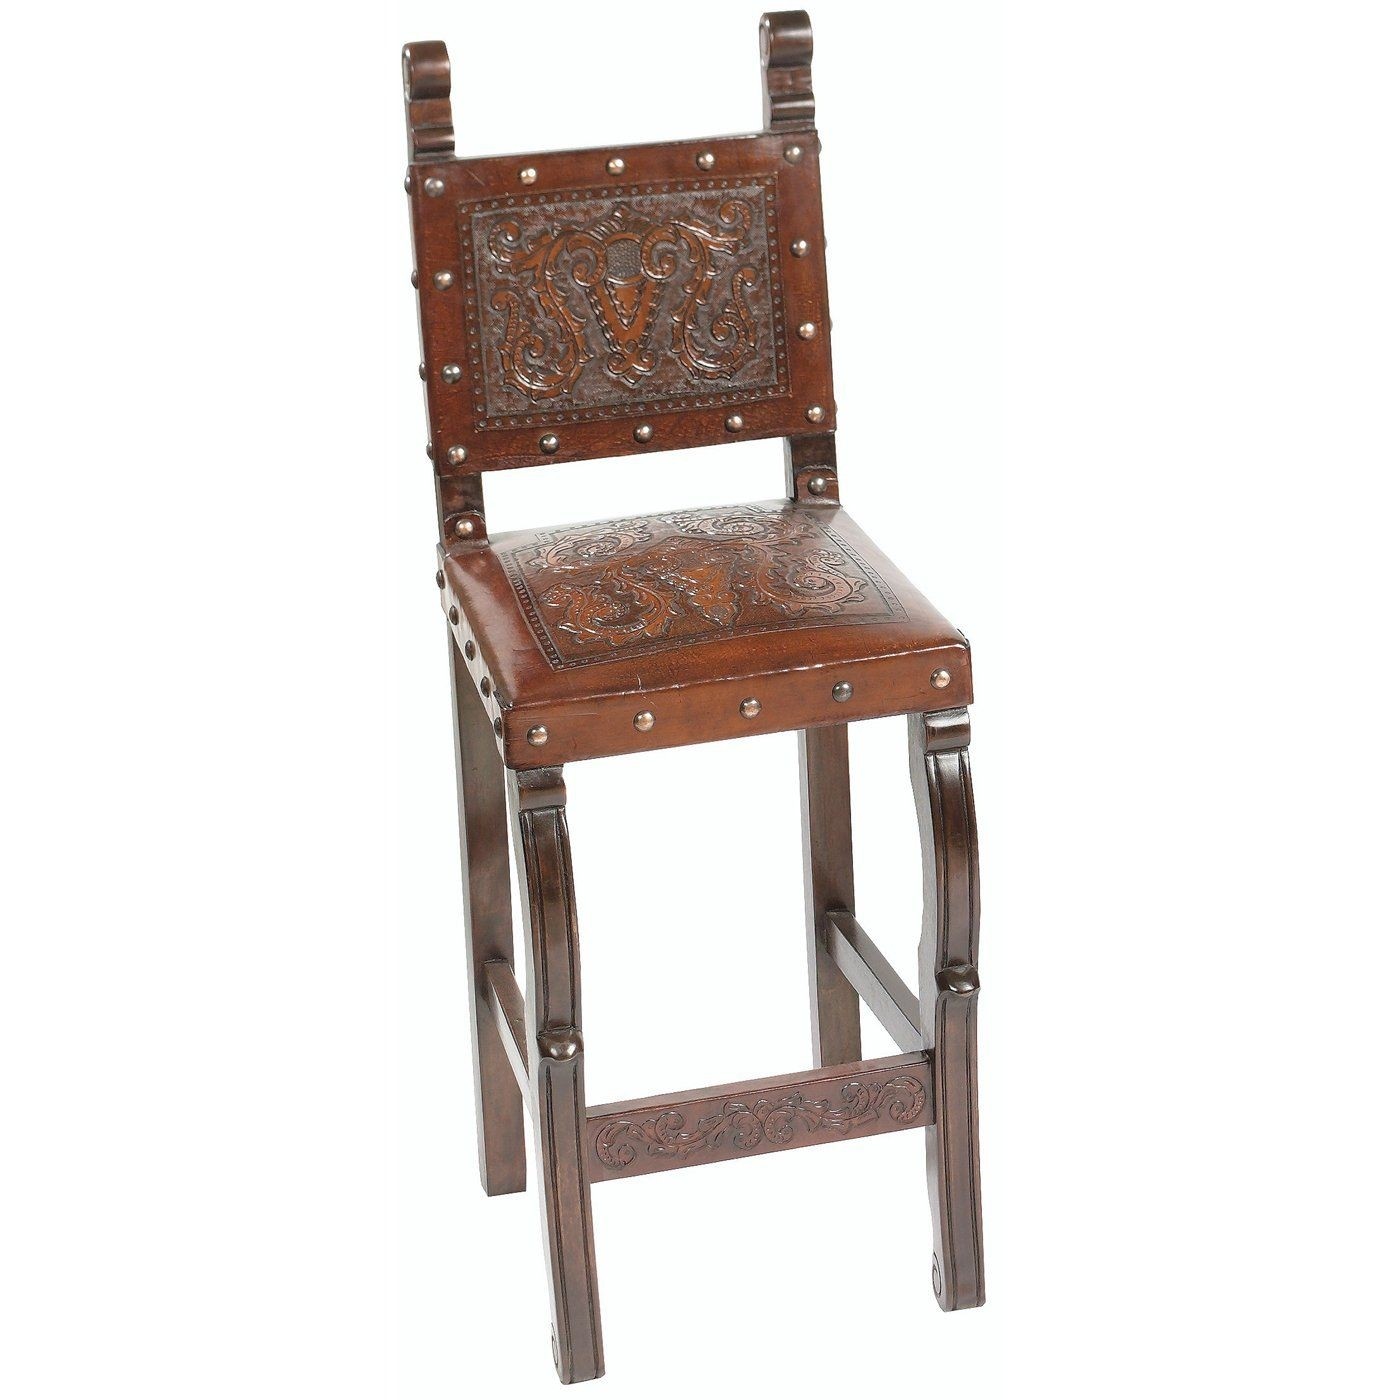 Tooled leather bar stools